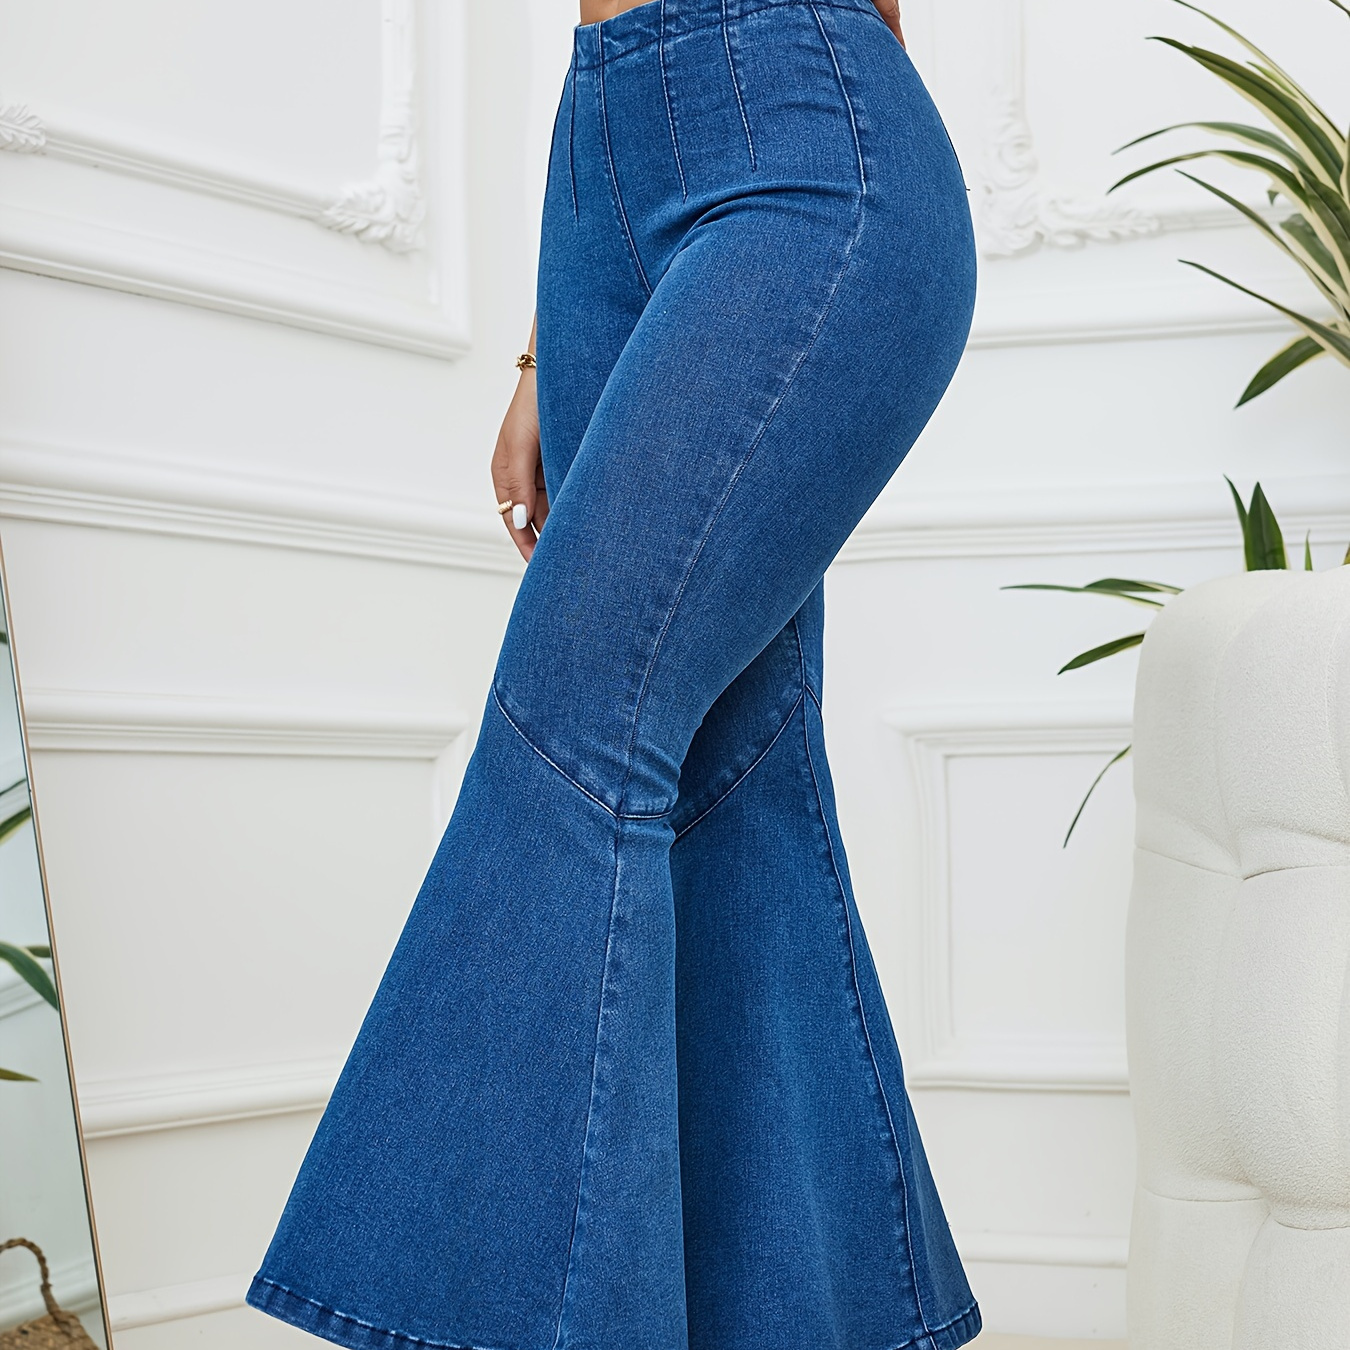 

Zipper Pleated Bell Bottom Jeans, Plain Washed Blue Stretchy Flare Leg Denim Pants, Women's Denim Jeans & Clothing